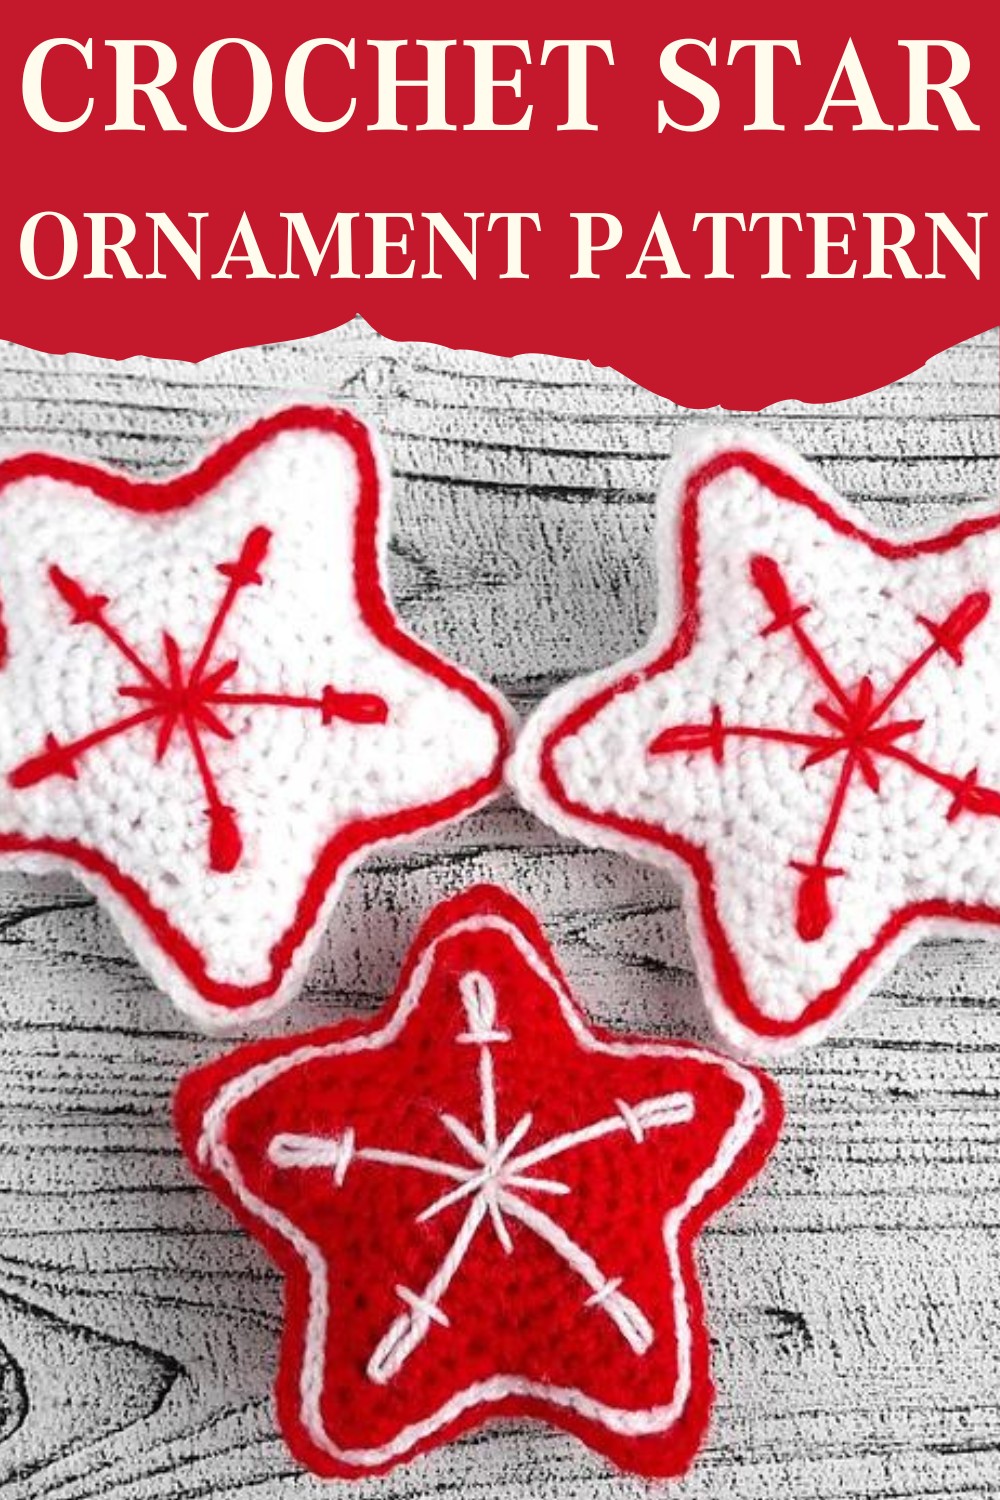 Crochet Star Ornament Pattern